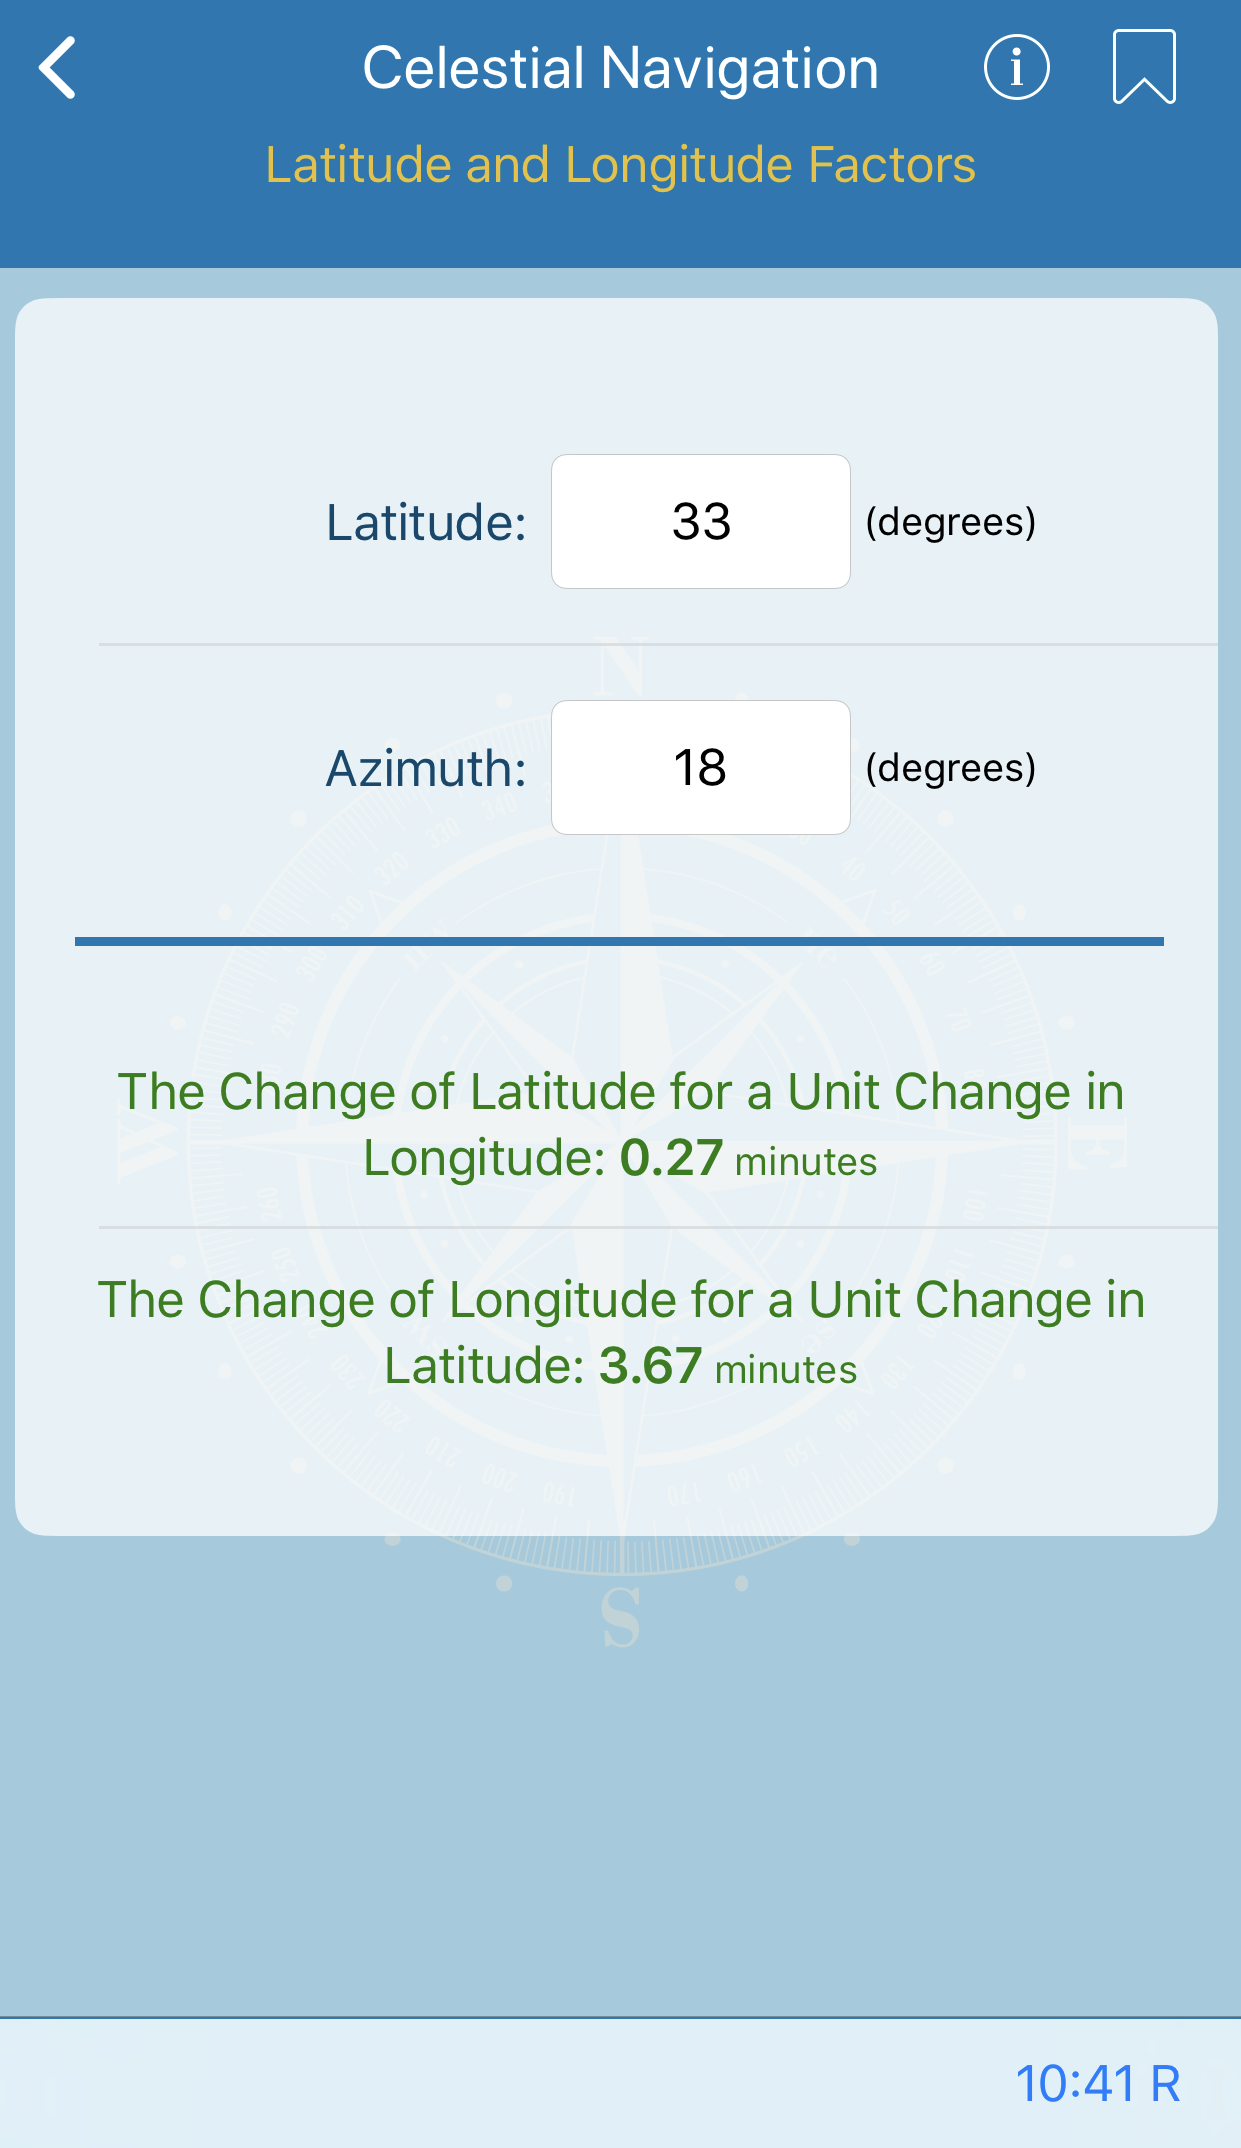 Latitude and Longitude Factors